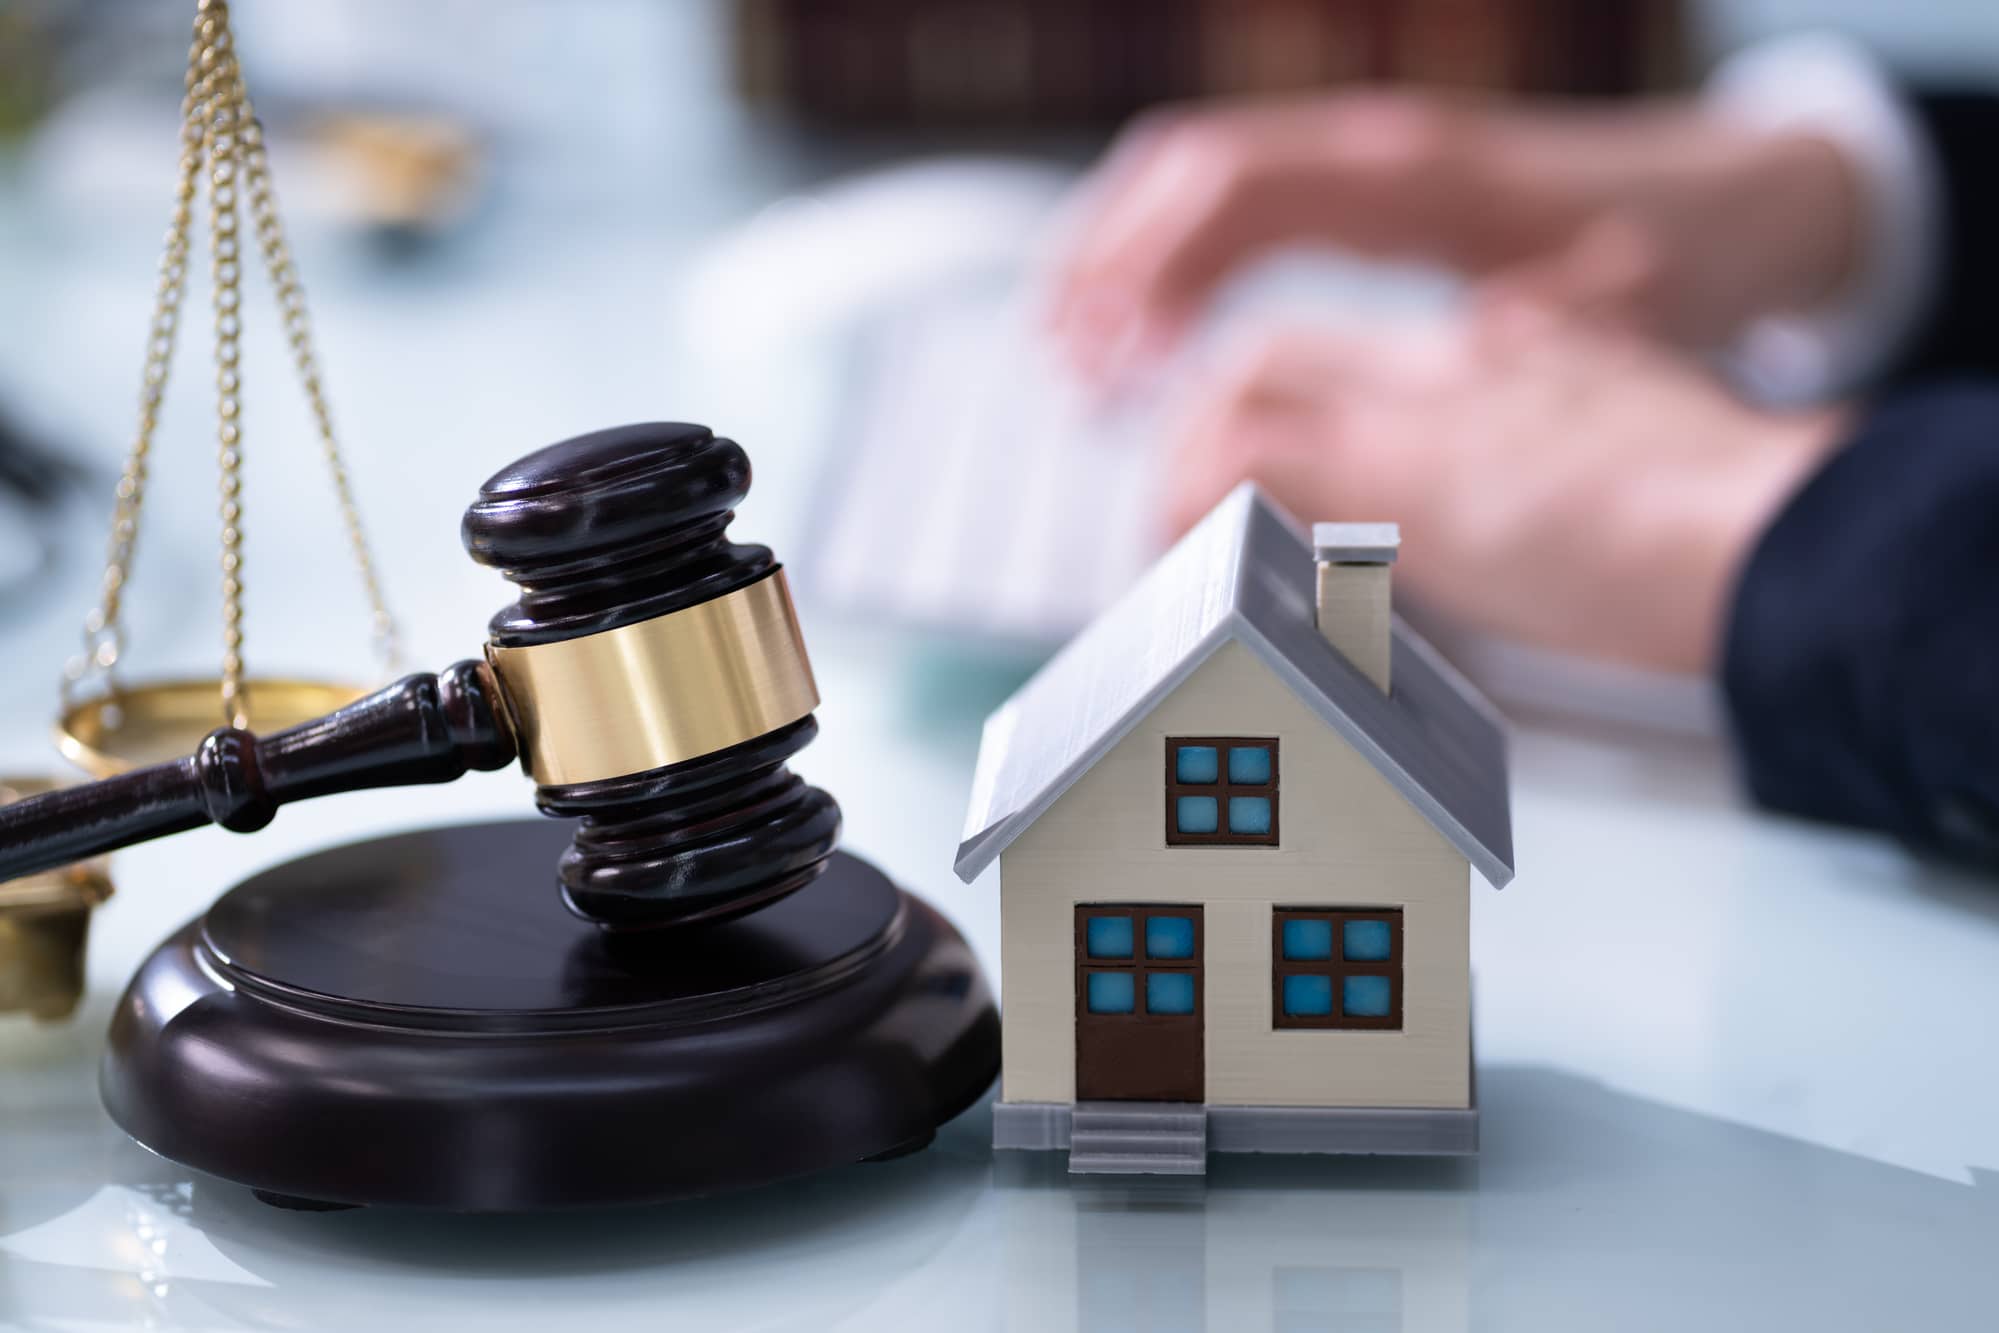 How Do Courts Handle Estate Litigation Cases That Center Around Undue Influence?